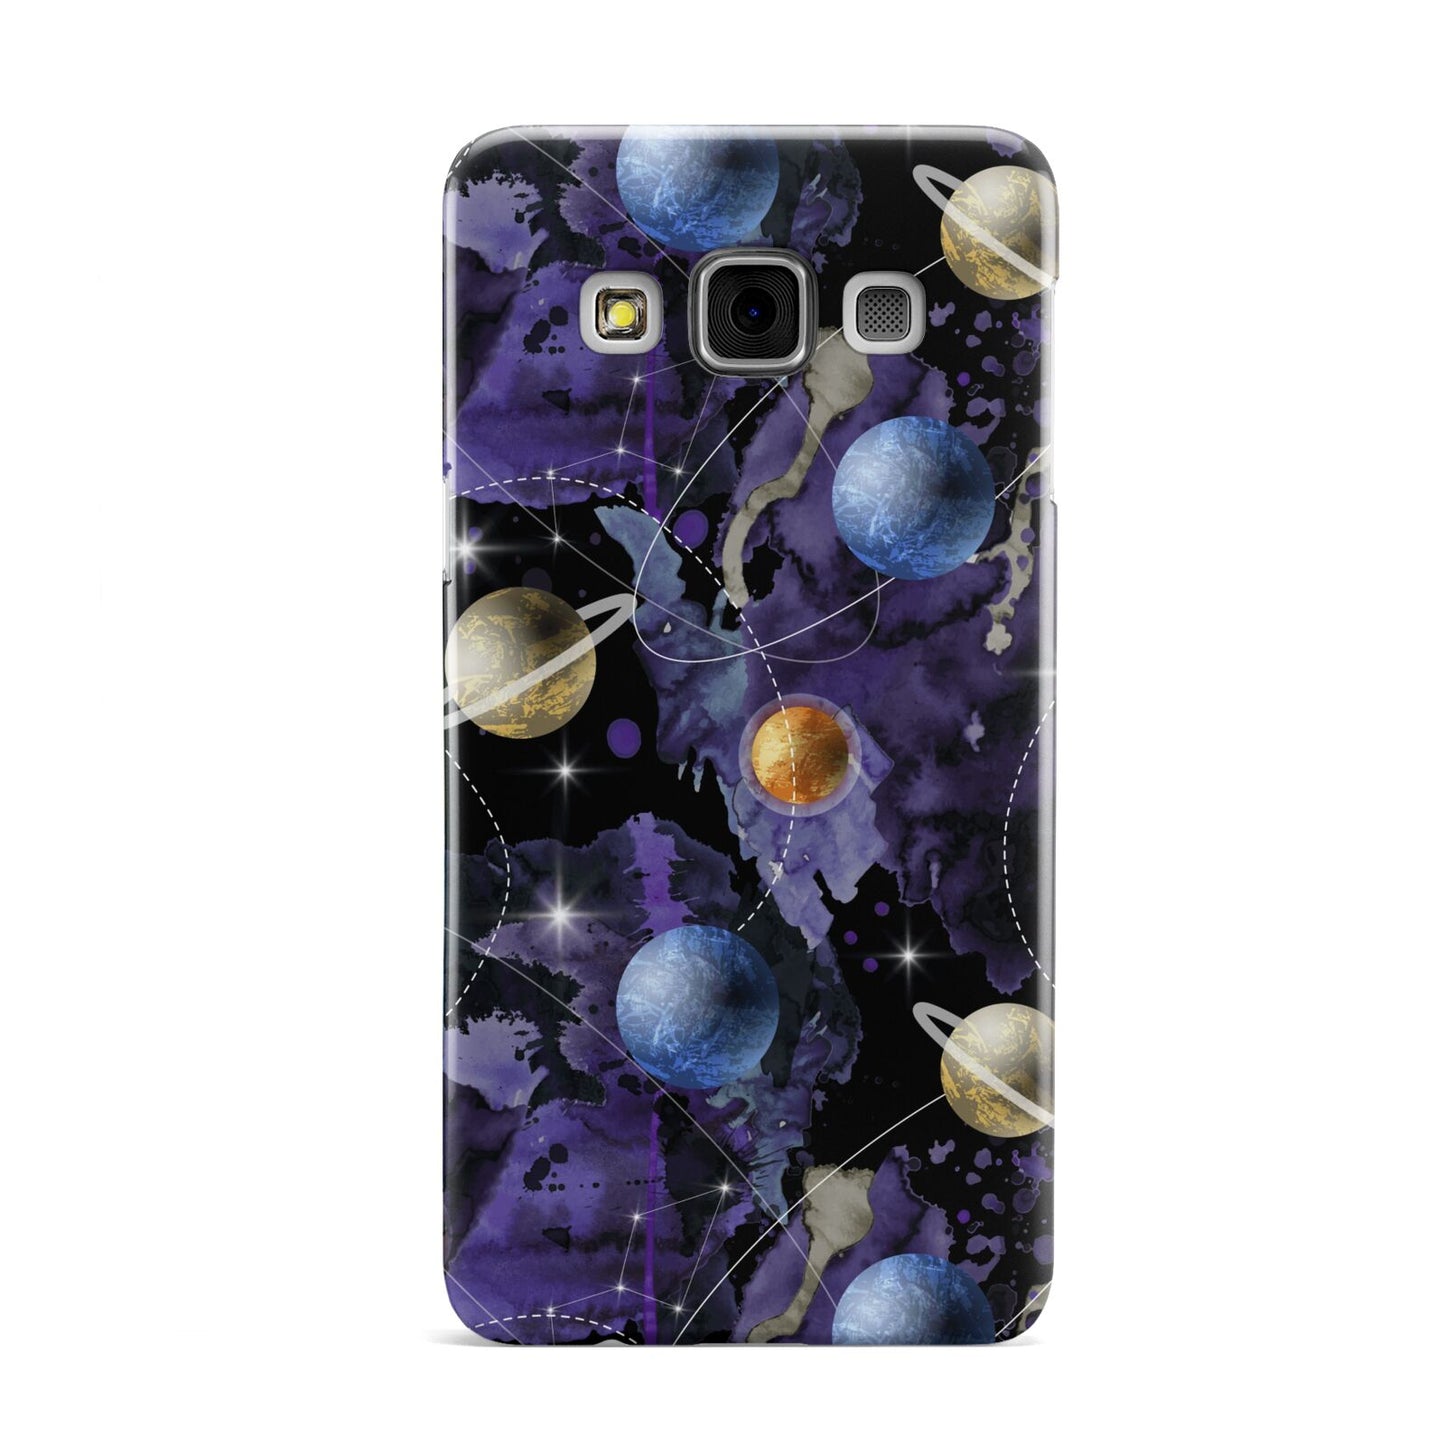 Planet Samsung Galaxy A3 Case